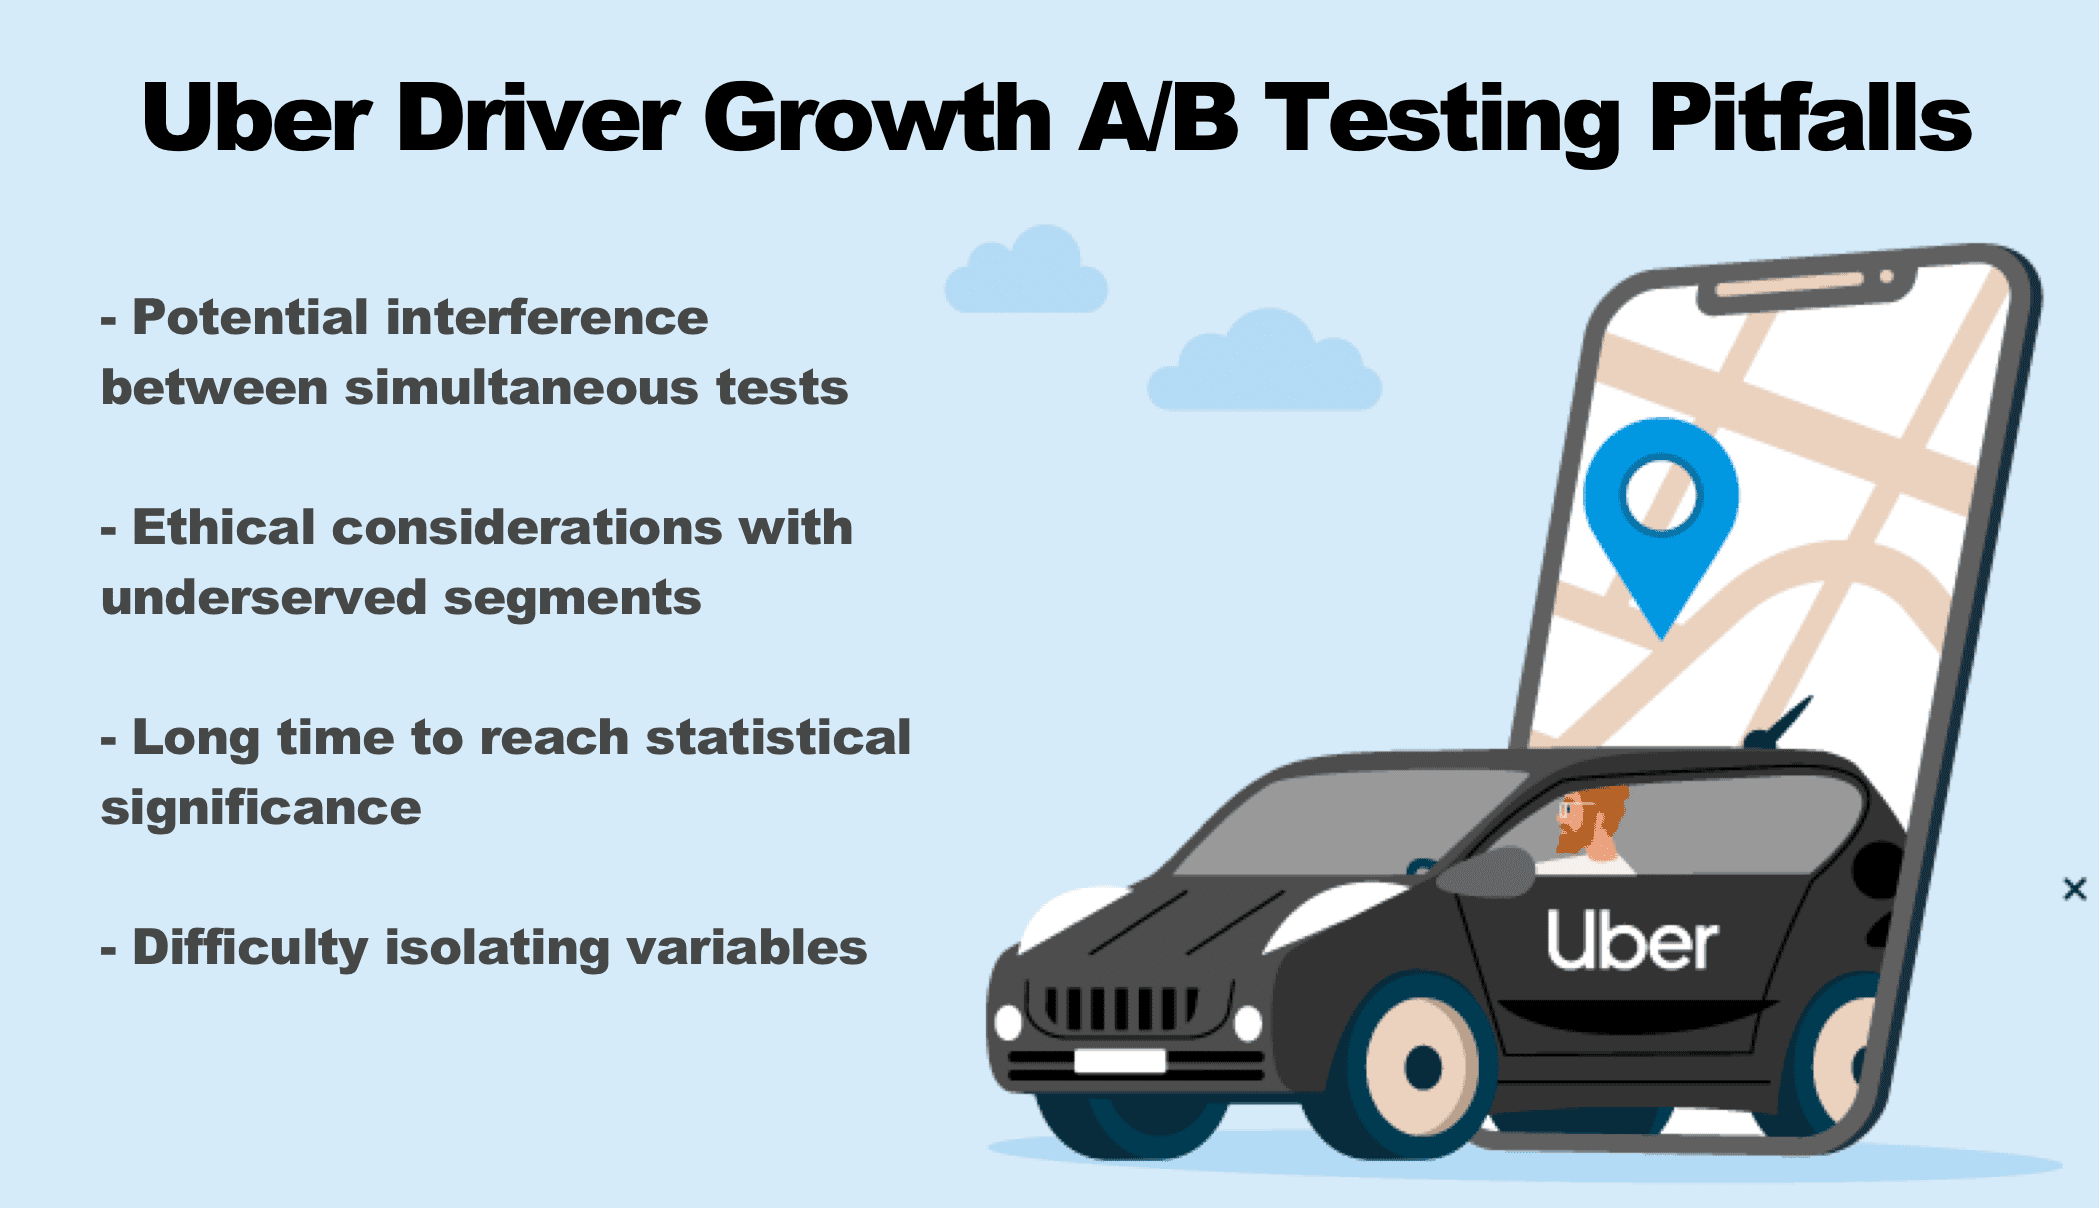 Uber A/B Testing Pitfalls